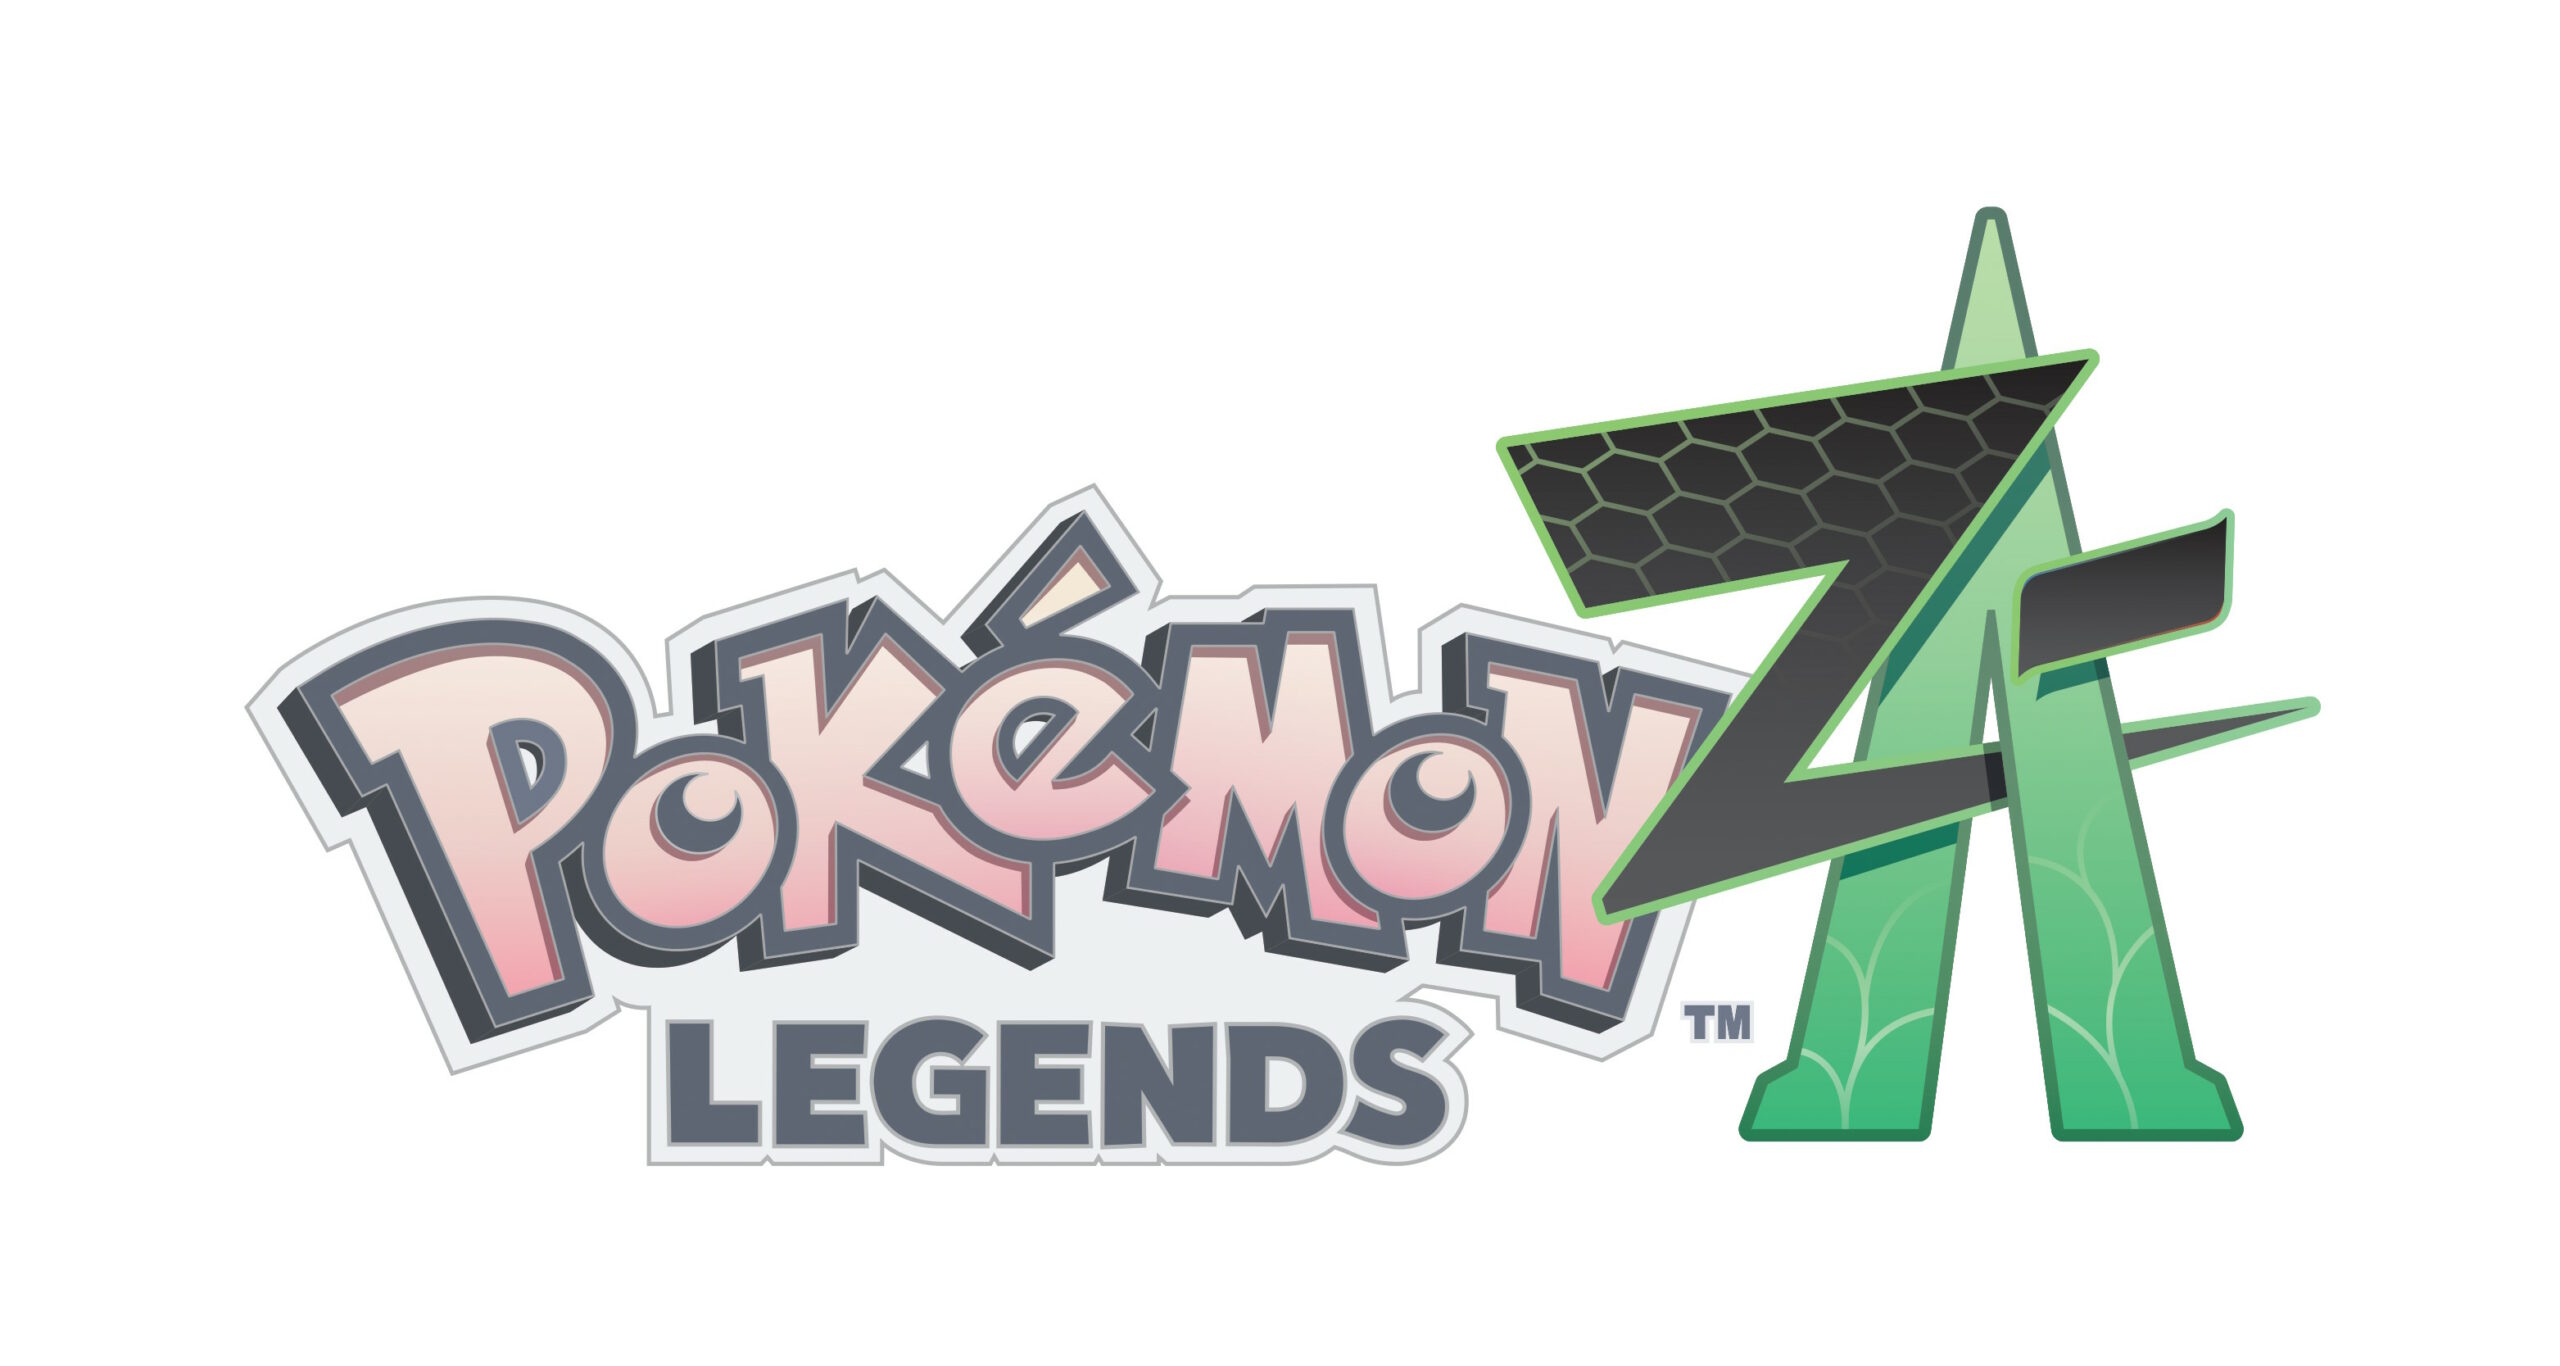  Pokémon Legends: Z-A announced, releasing 2025